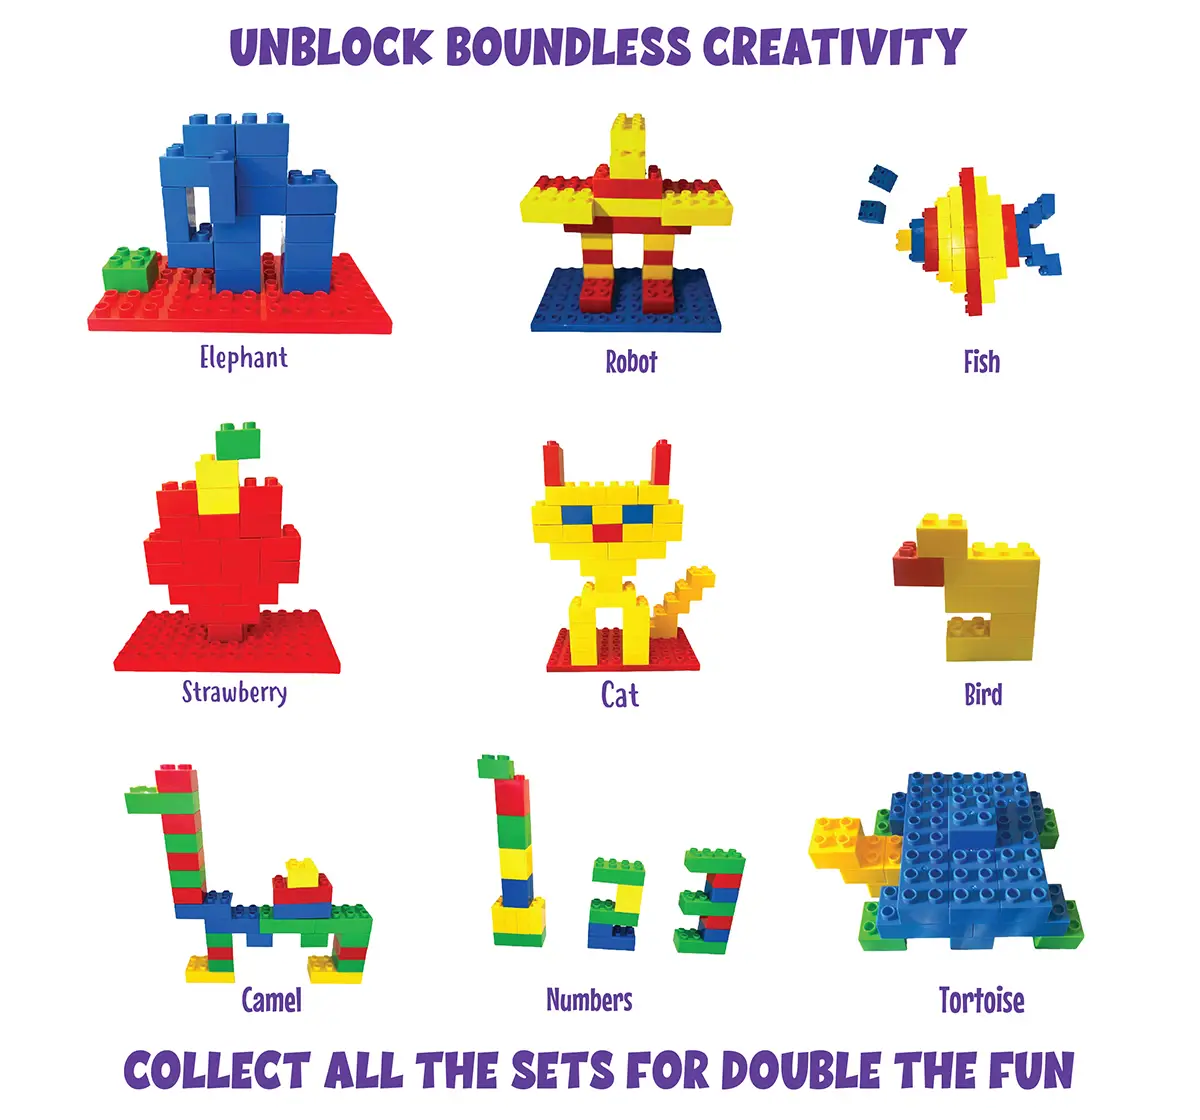 PlayMagic Building Blocks 85 Pieces For Kids of Age 3Y+, Multicolour